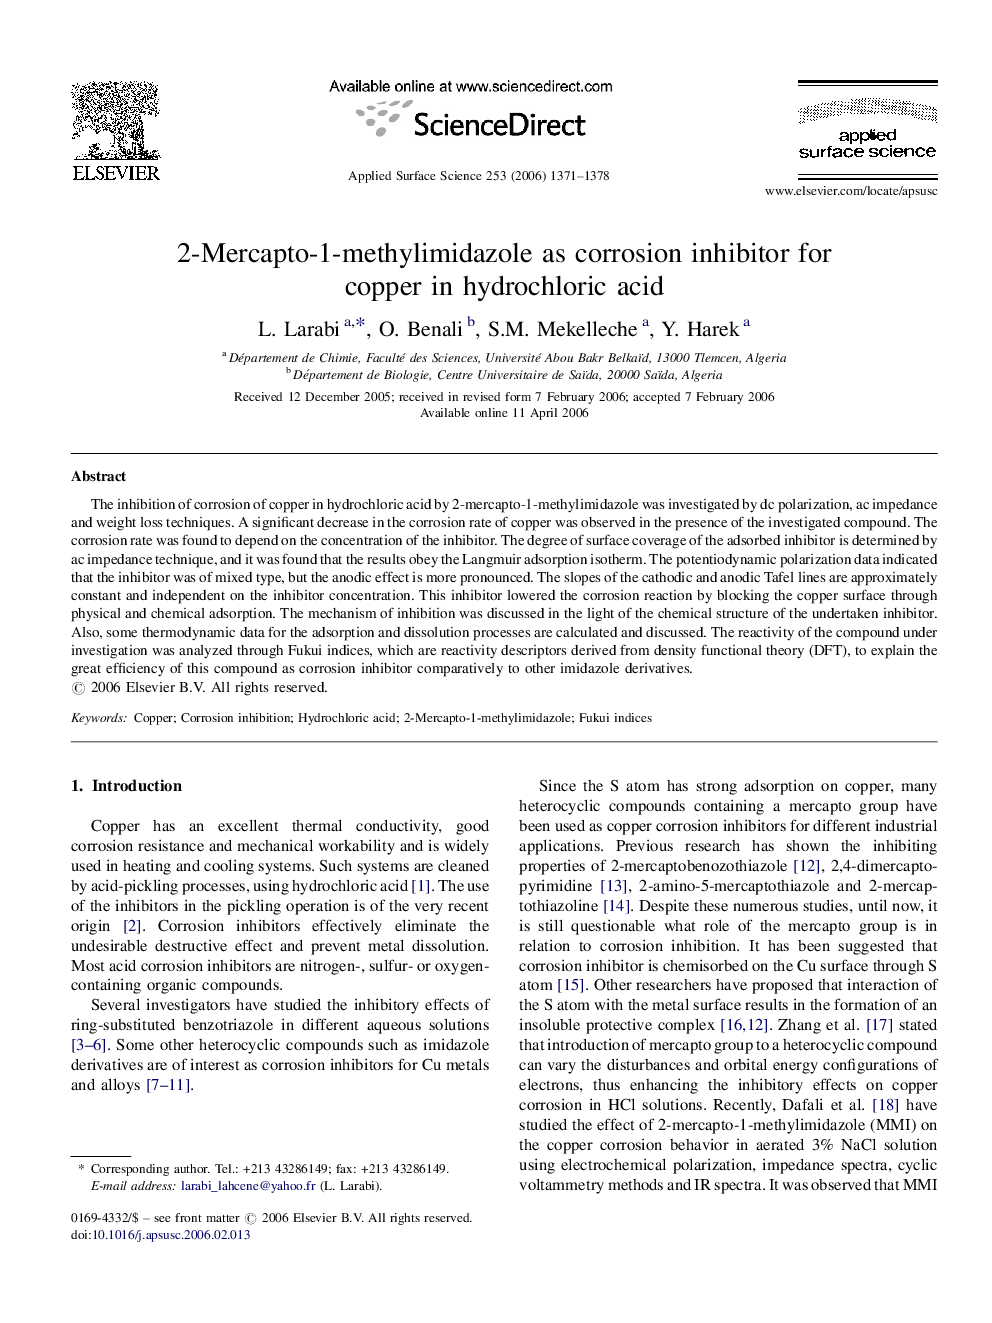 2-Mercapto-1-methylimidazole as corrosion inhibitor for copper in hydrochloric acid